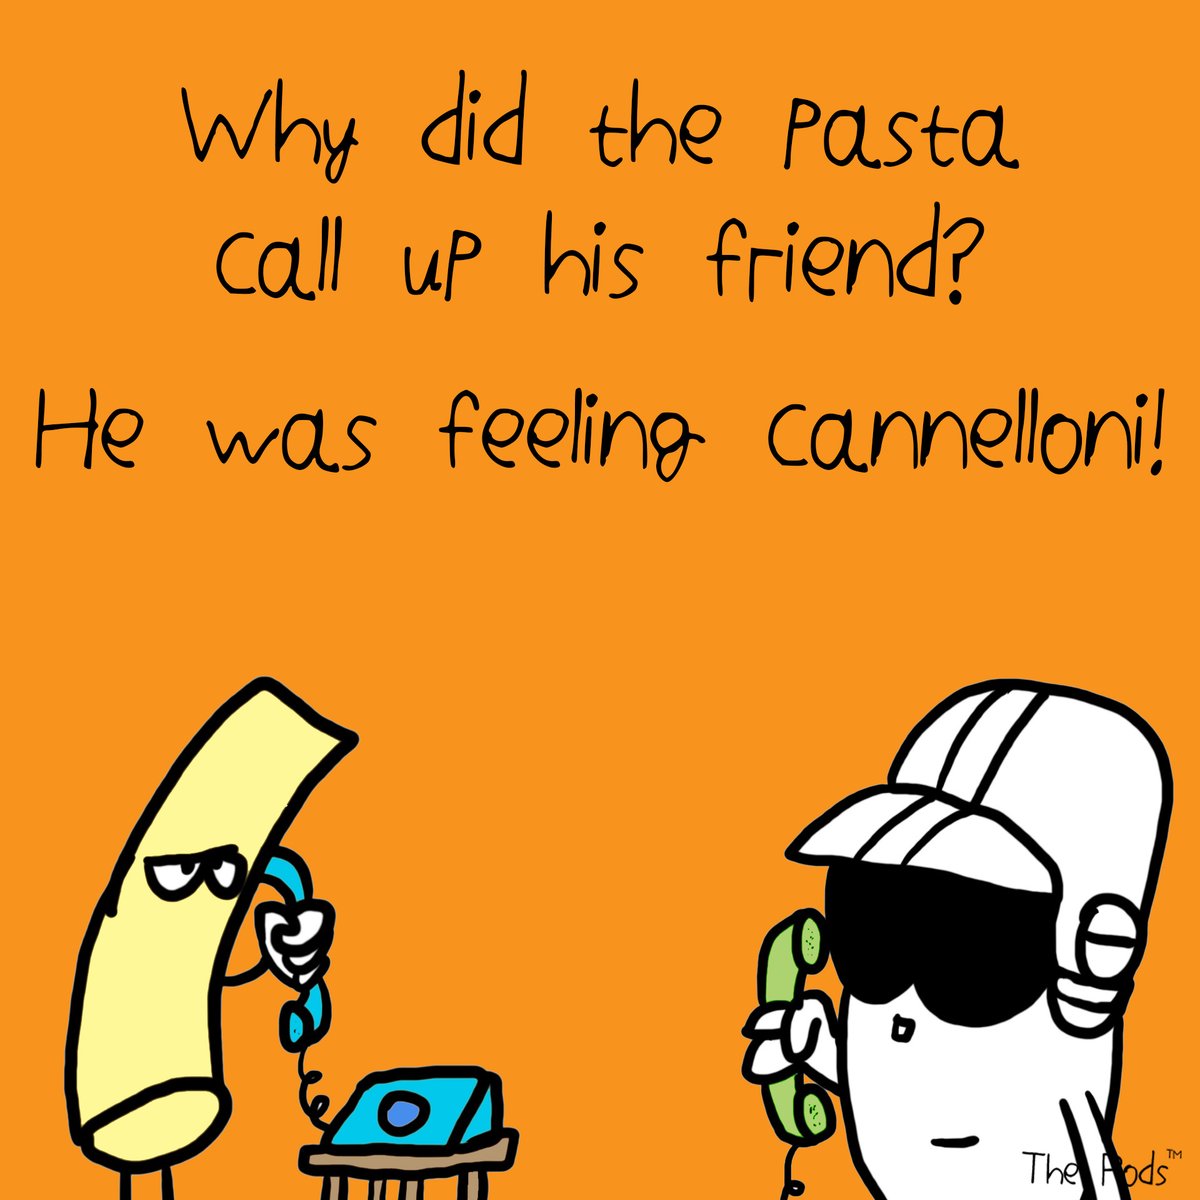 A silly joke for Sunday morning...
#joke #sillyjoke #sunday #sundayfun #silly #haha #hahaha #meetthepods #spypod #thepods #pasta #pastajoke #foodjoke #laugh #laughter #cannelloni #chuckle #chortle #hahaha